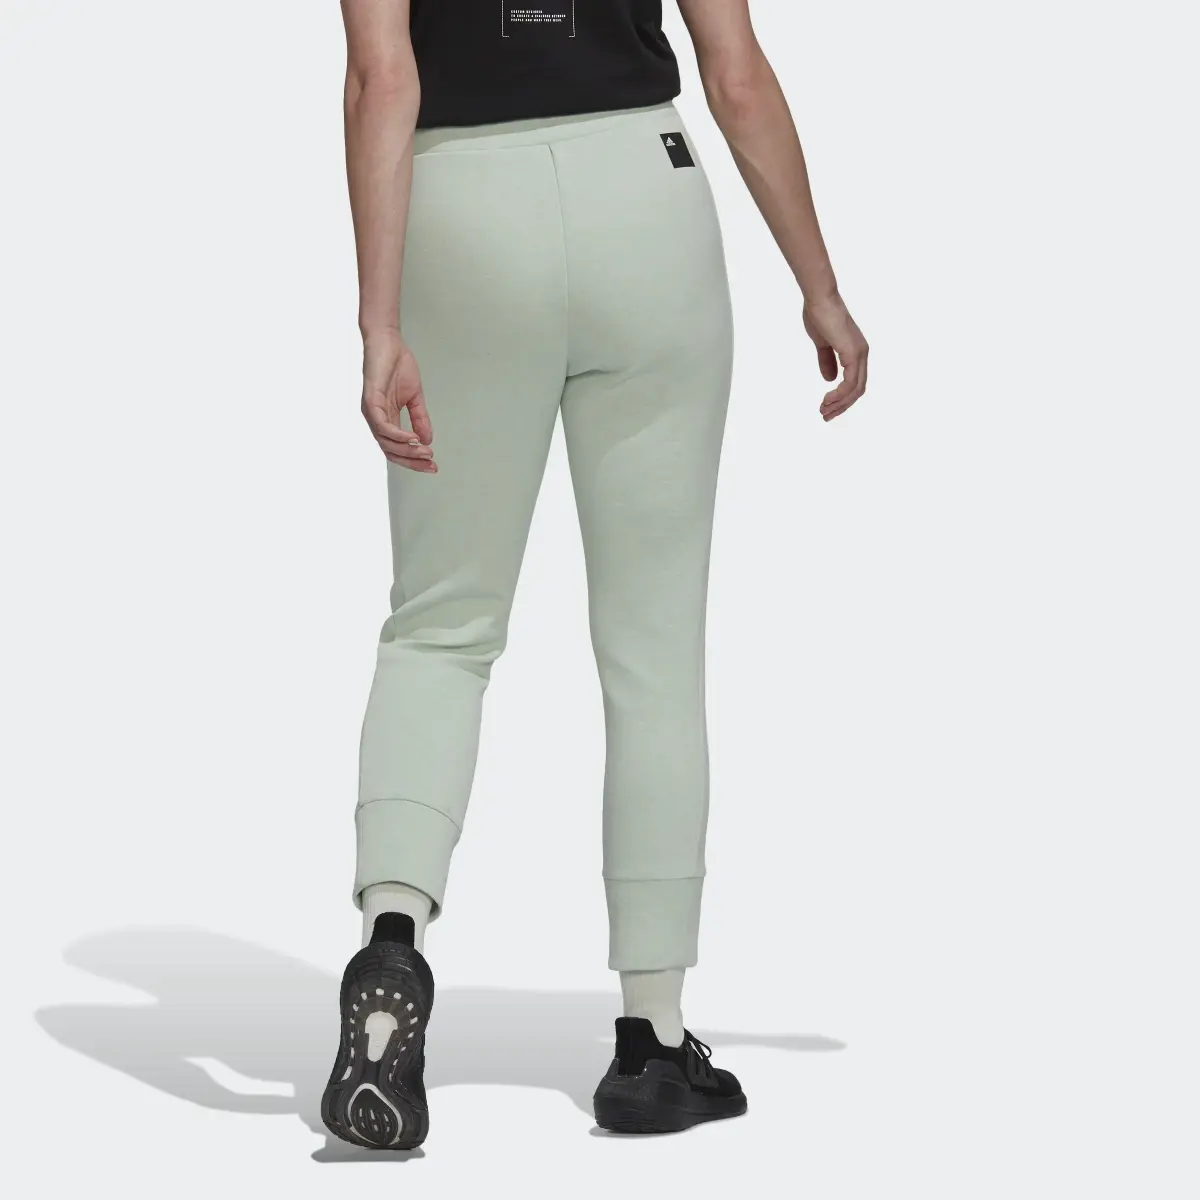 Adidas Mission Victory Slim-Fit High-Waist Pants. 2